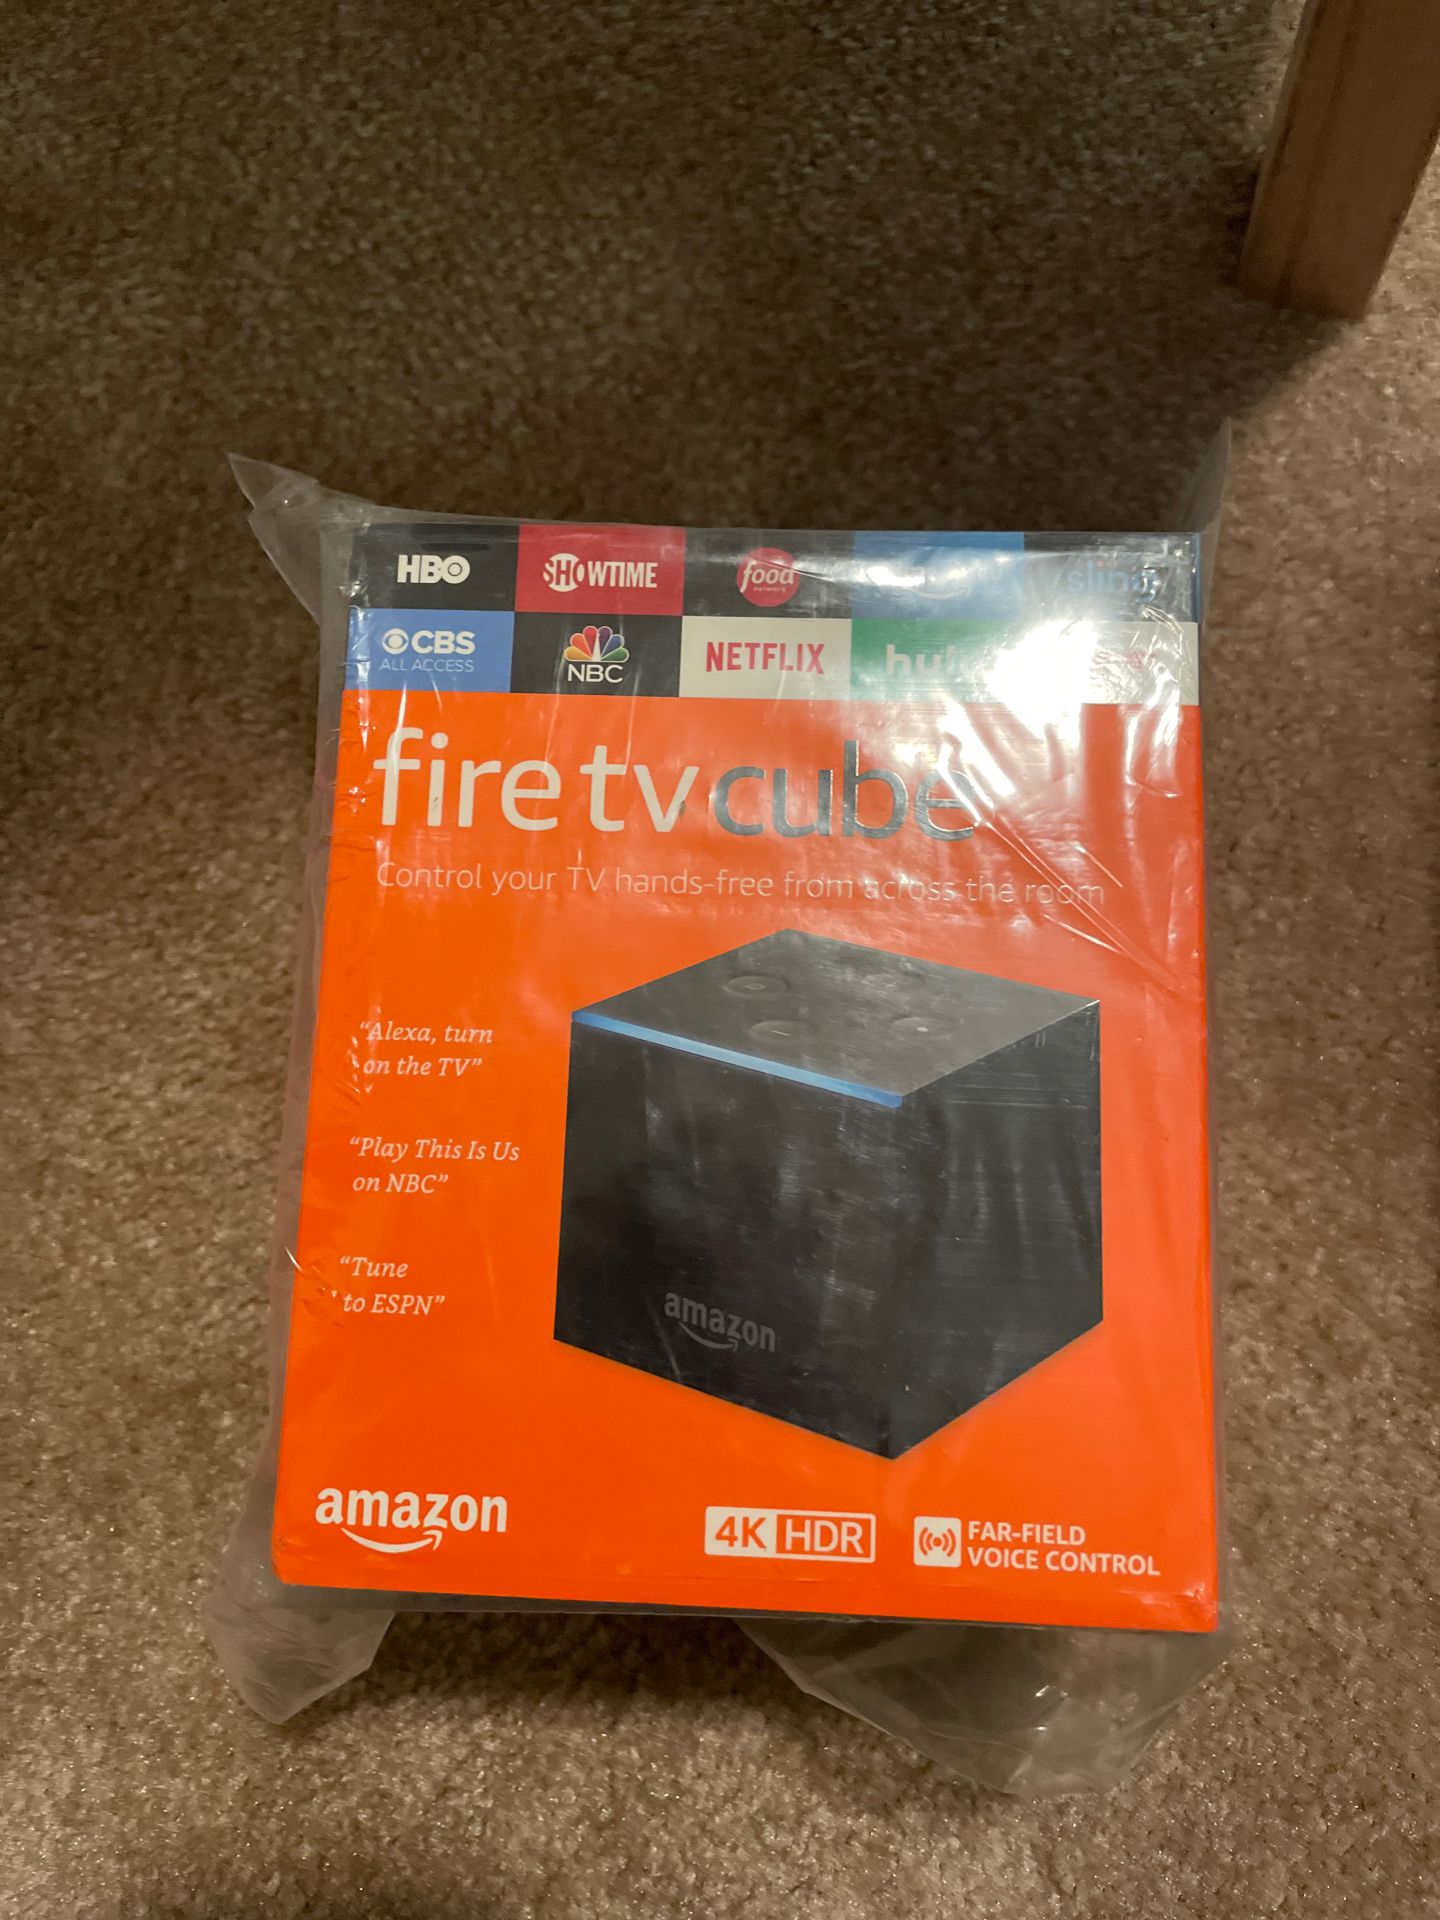 Amazon fire TV cube